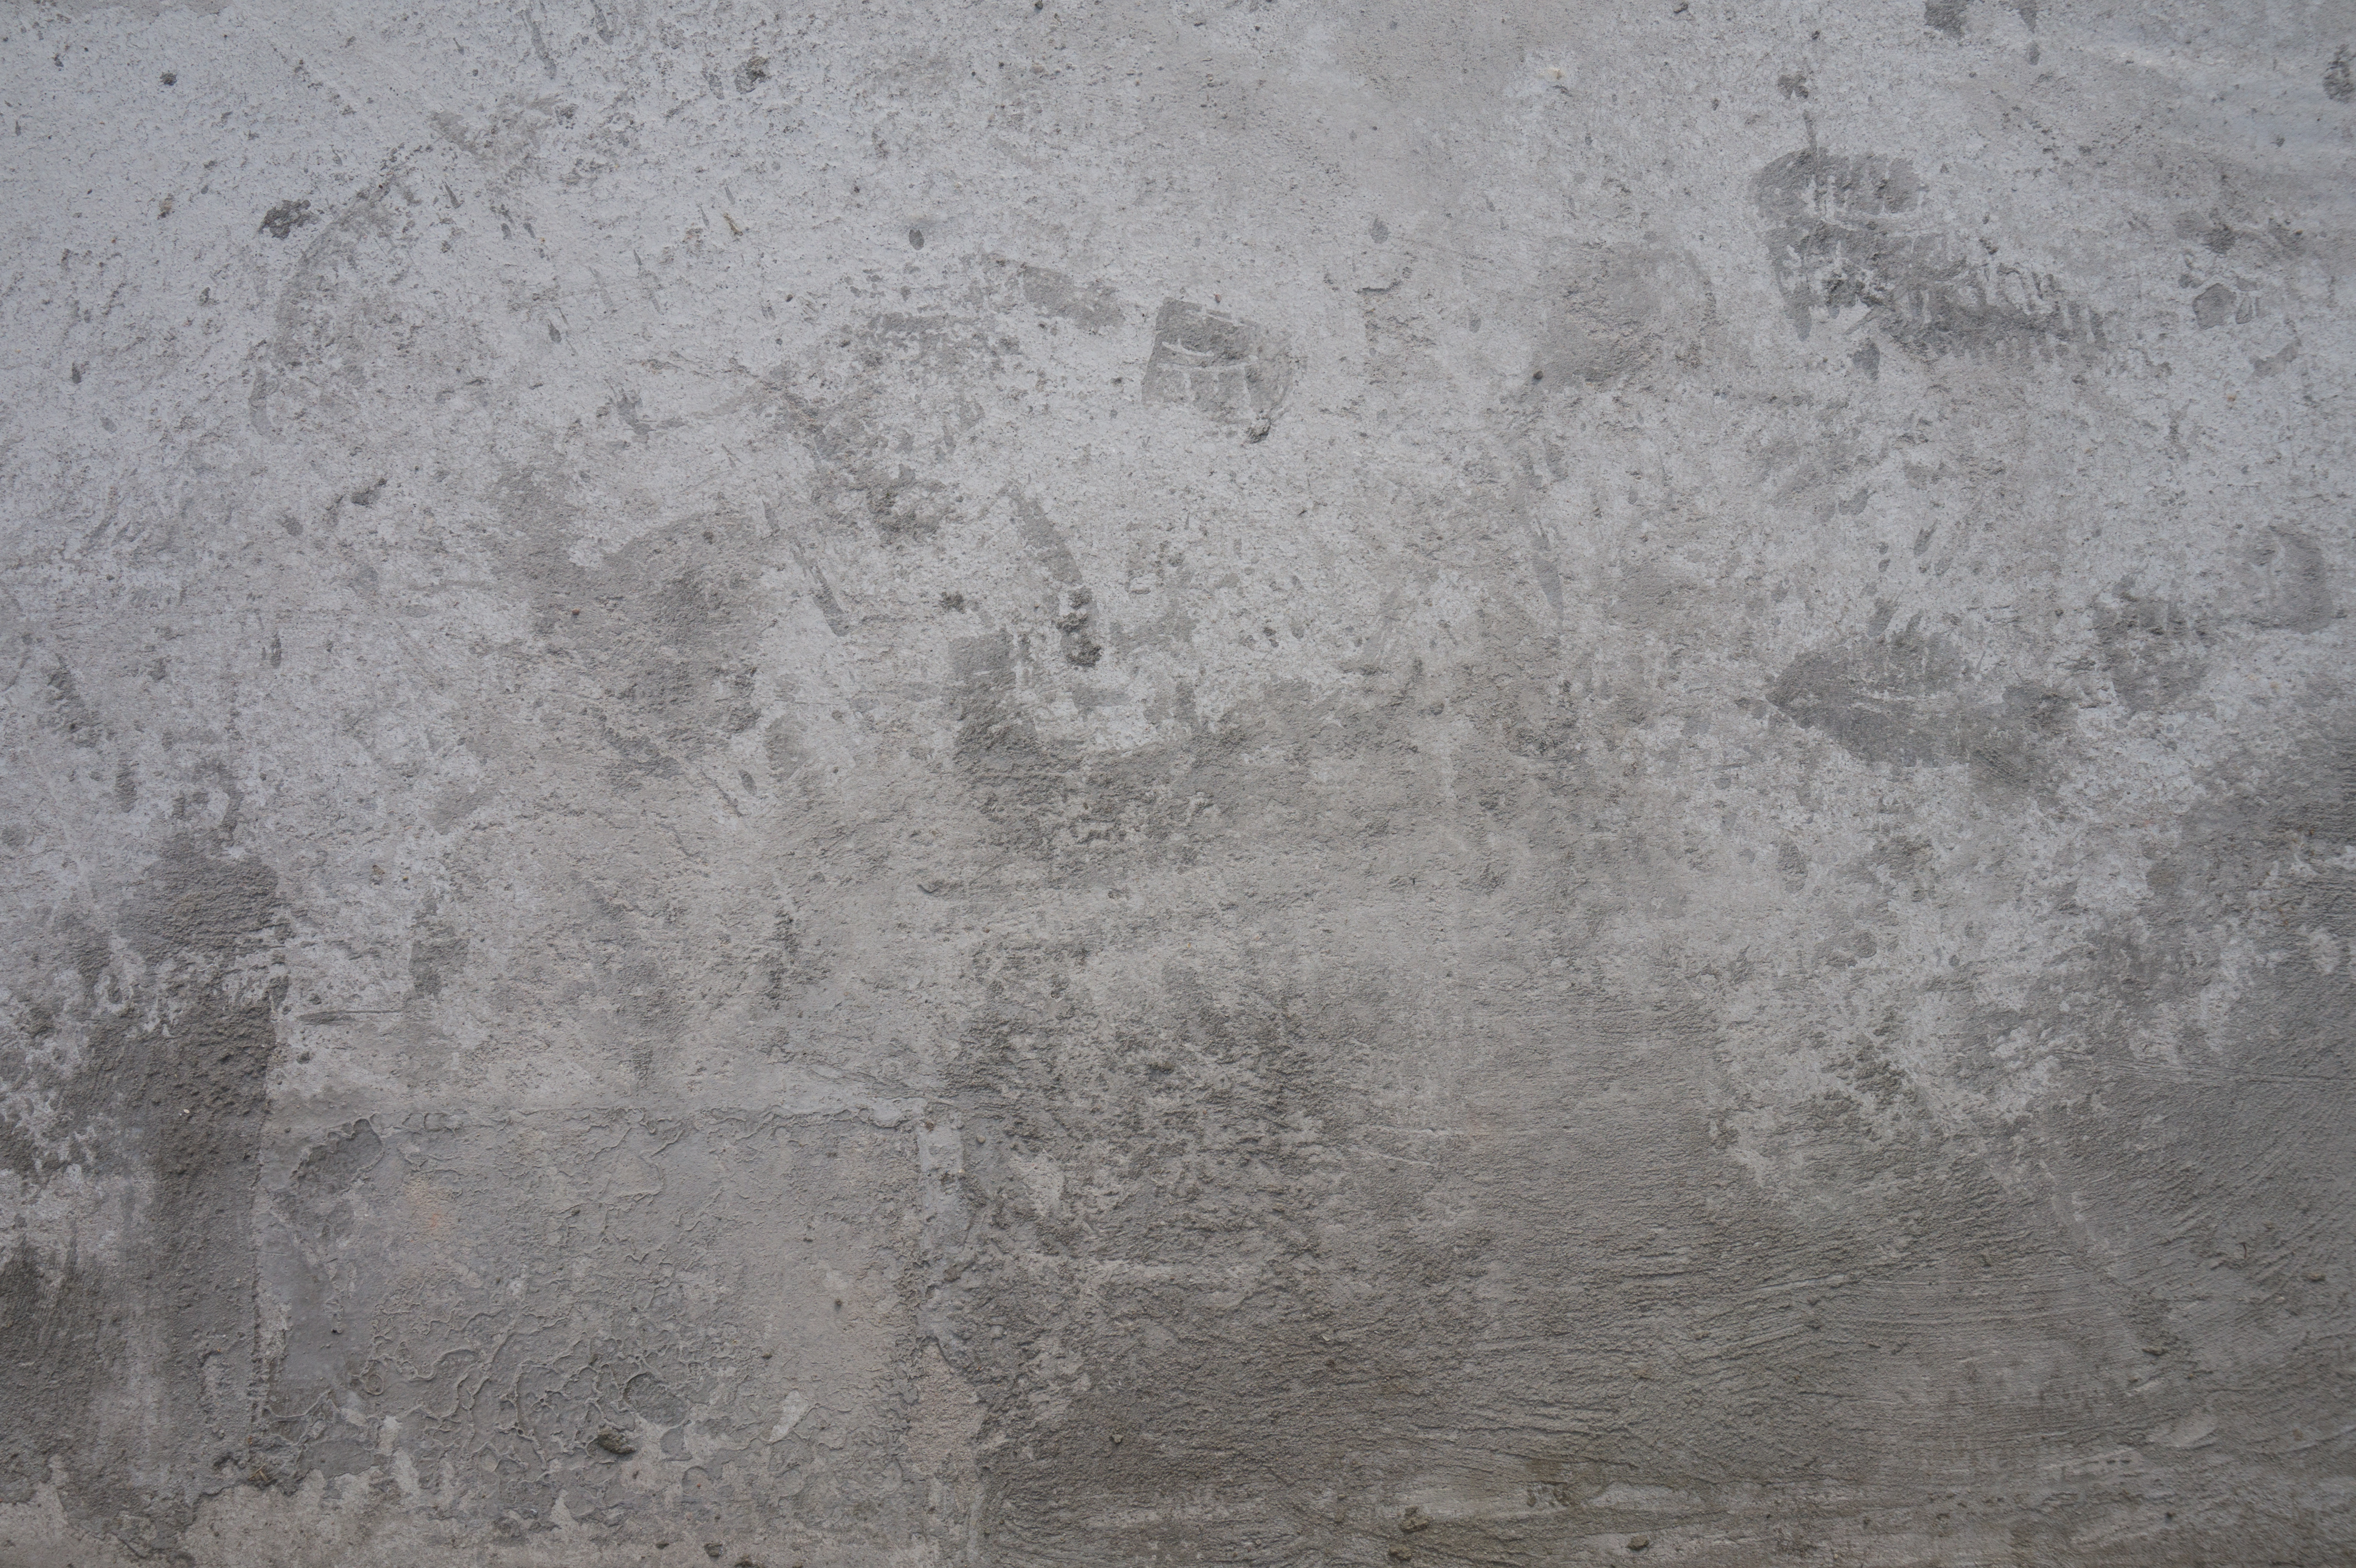 Concrete wall - Concrete - Texturify - Free textures